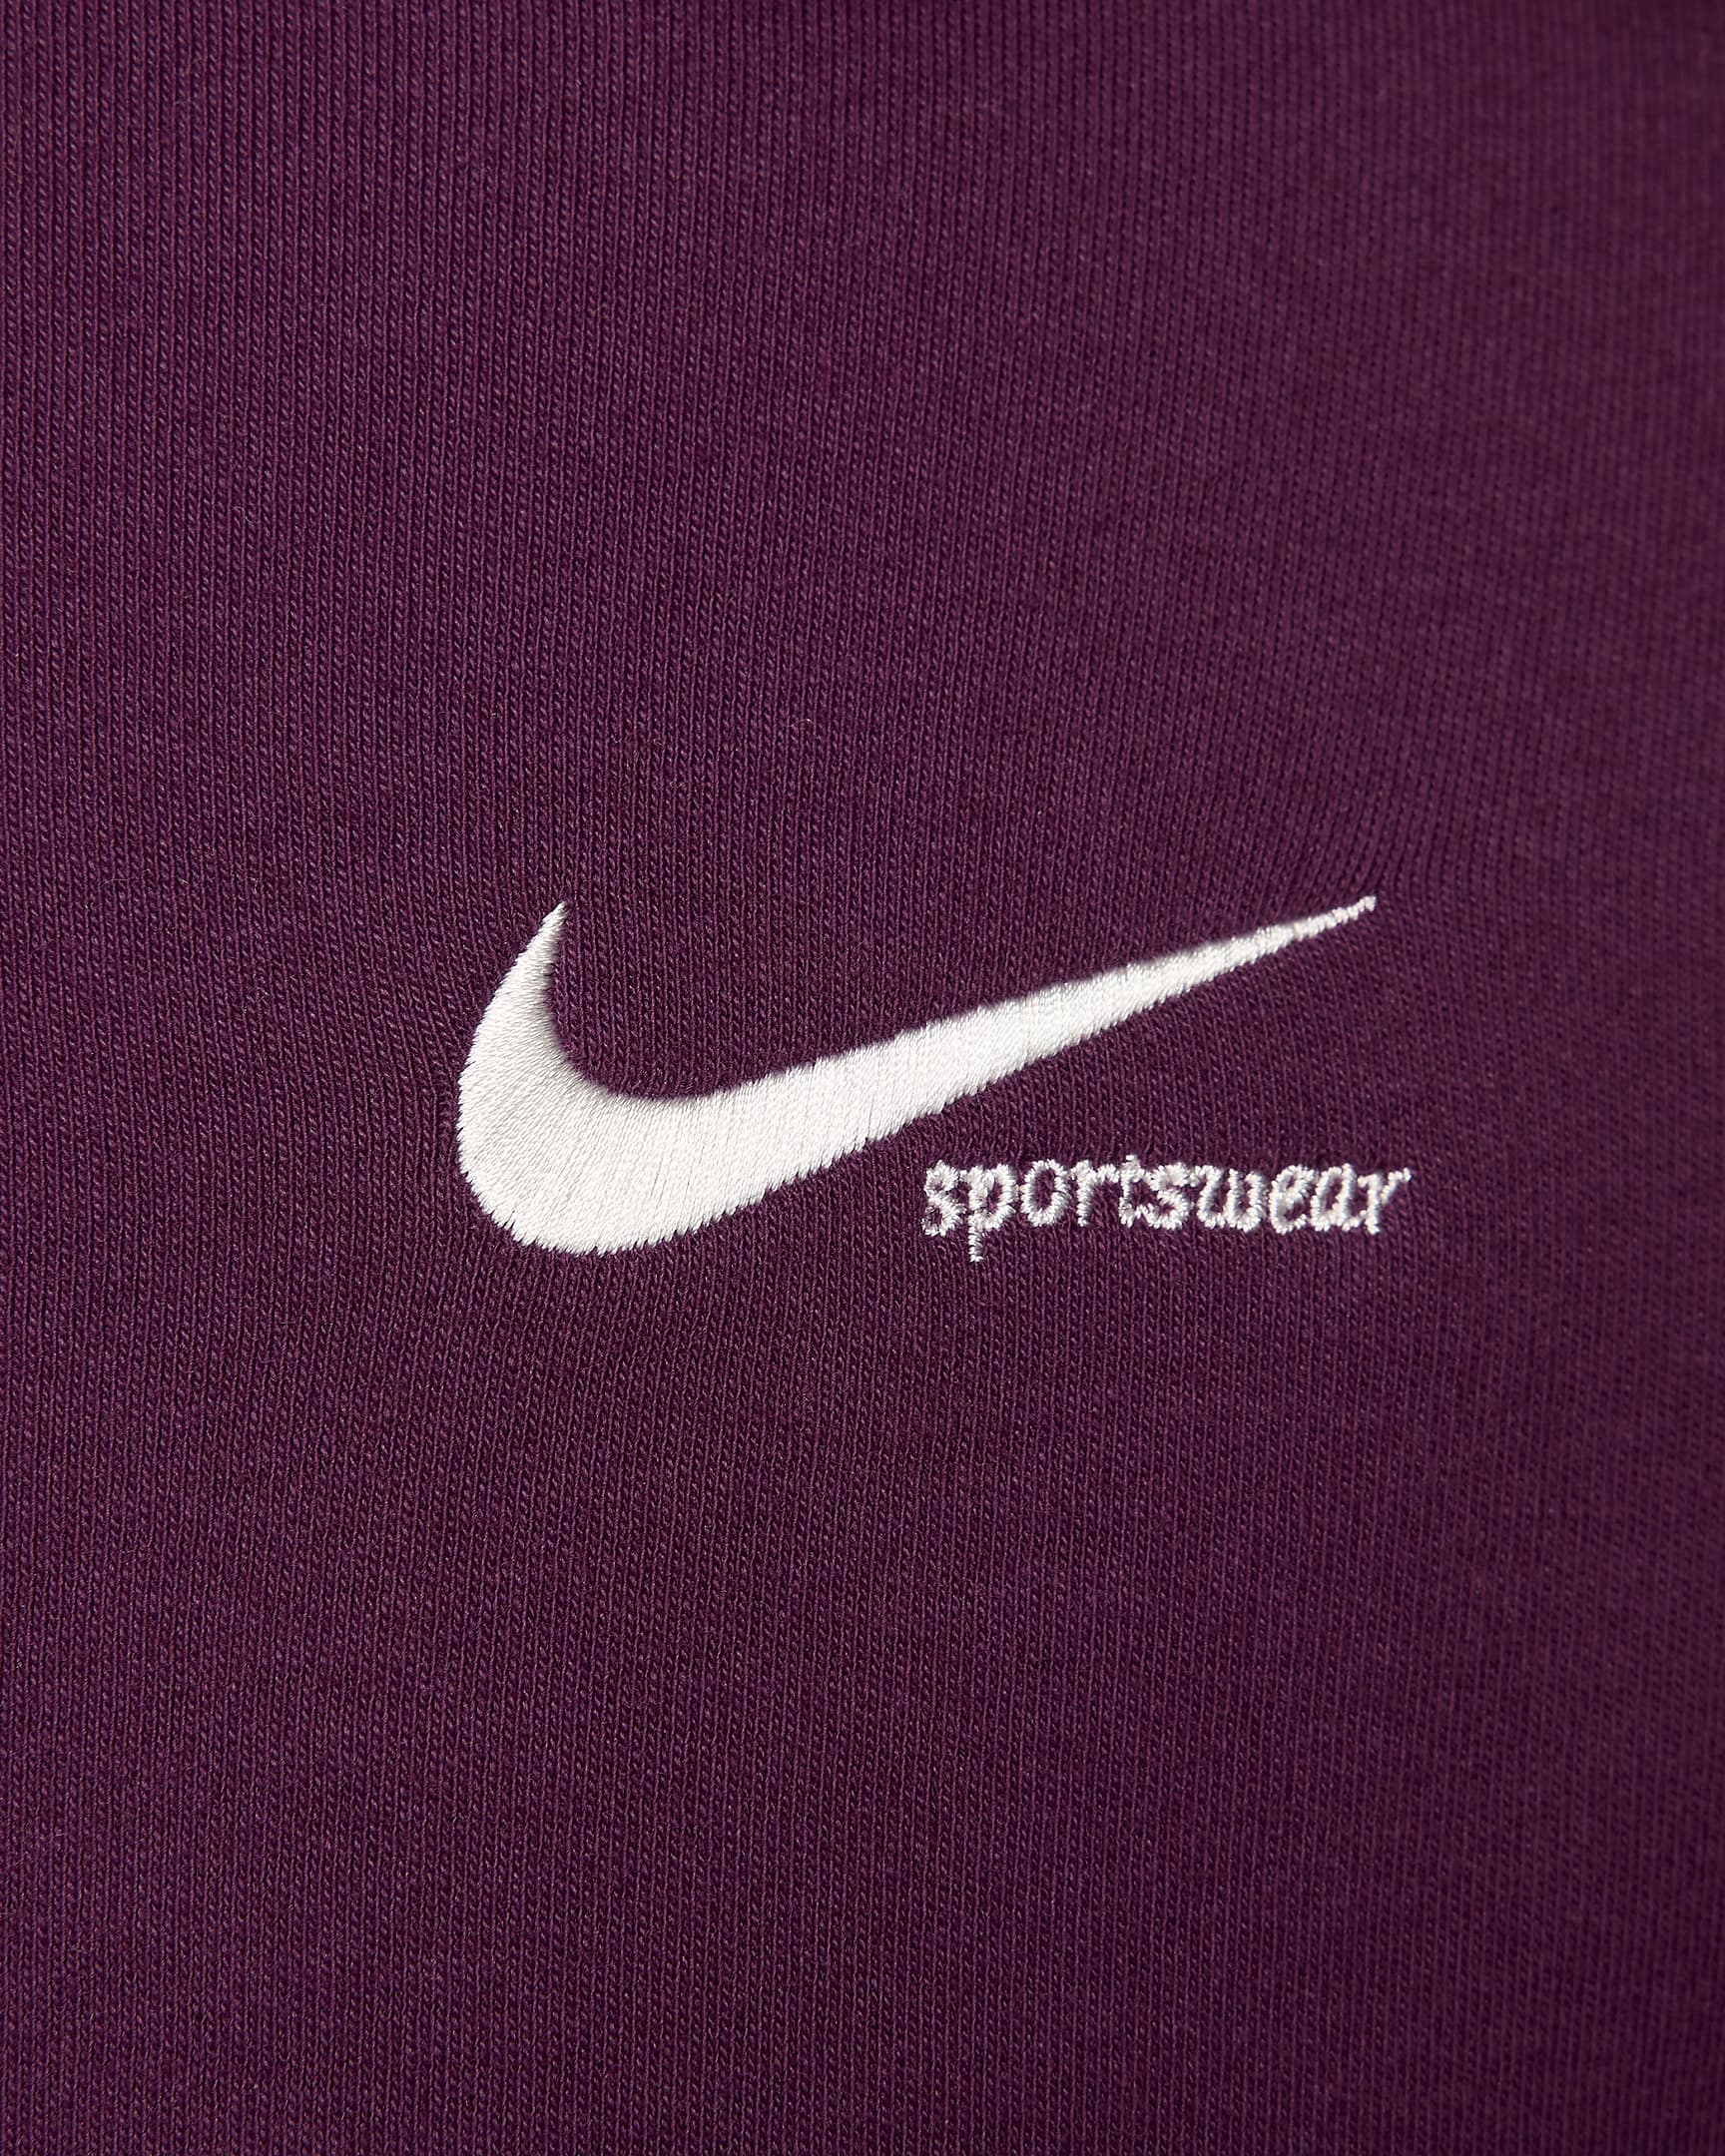 Nike Sportswear Collection Women's Mock-Neck Top. Nike RO